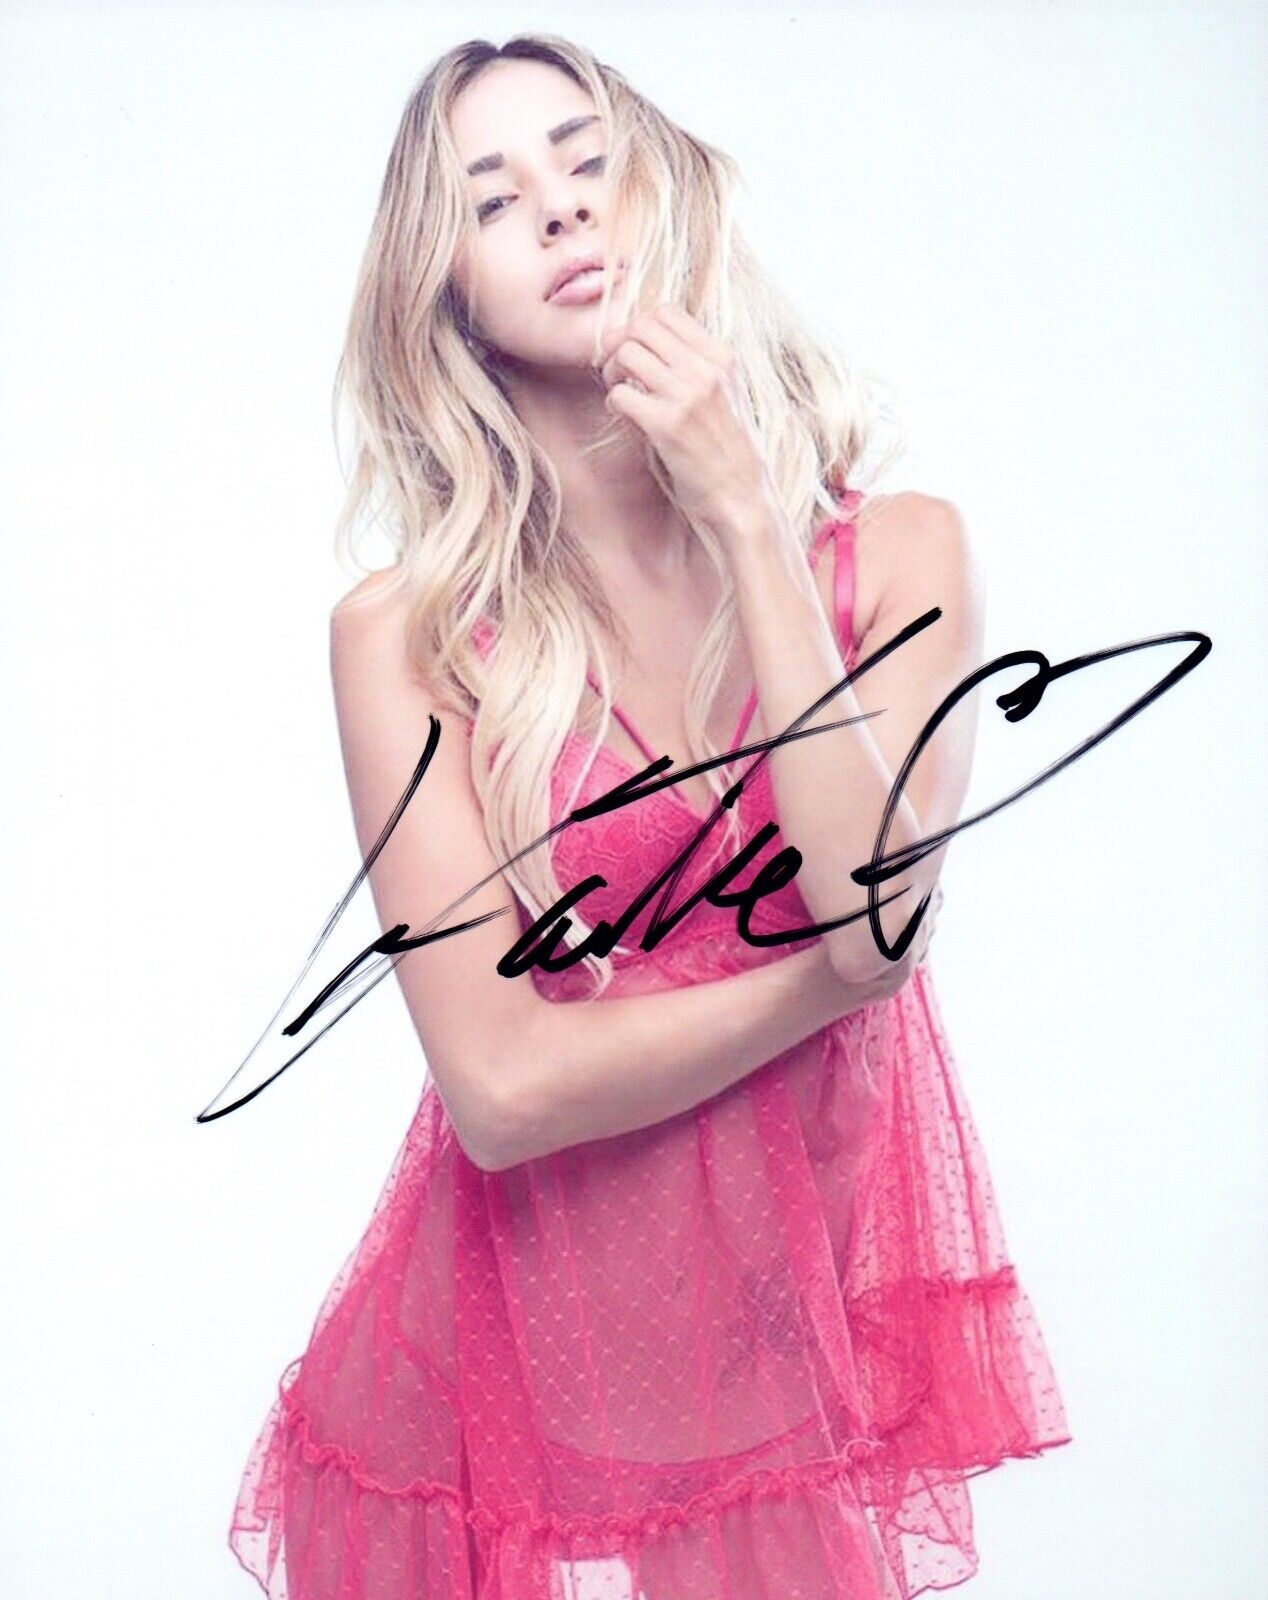 Kaitlin Jochimsen Signed Autographed 8x10 Photo Poster painting Model Actress COA